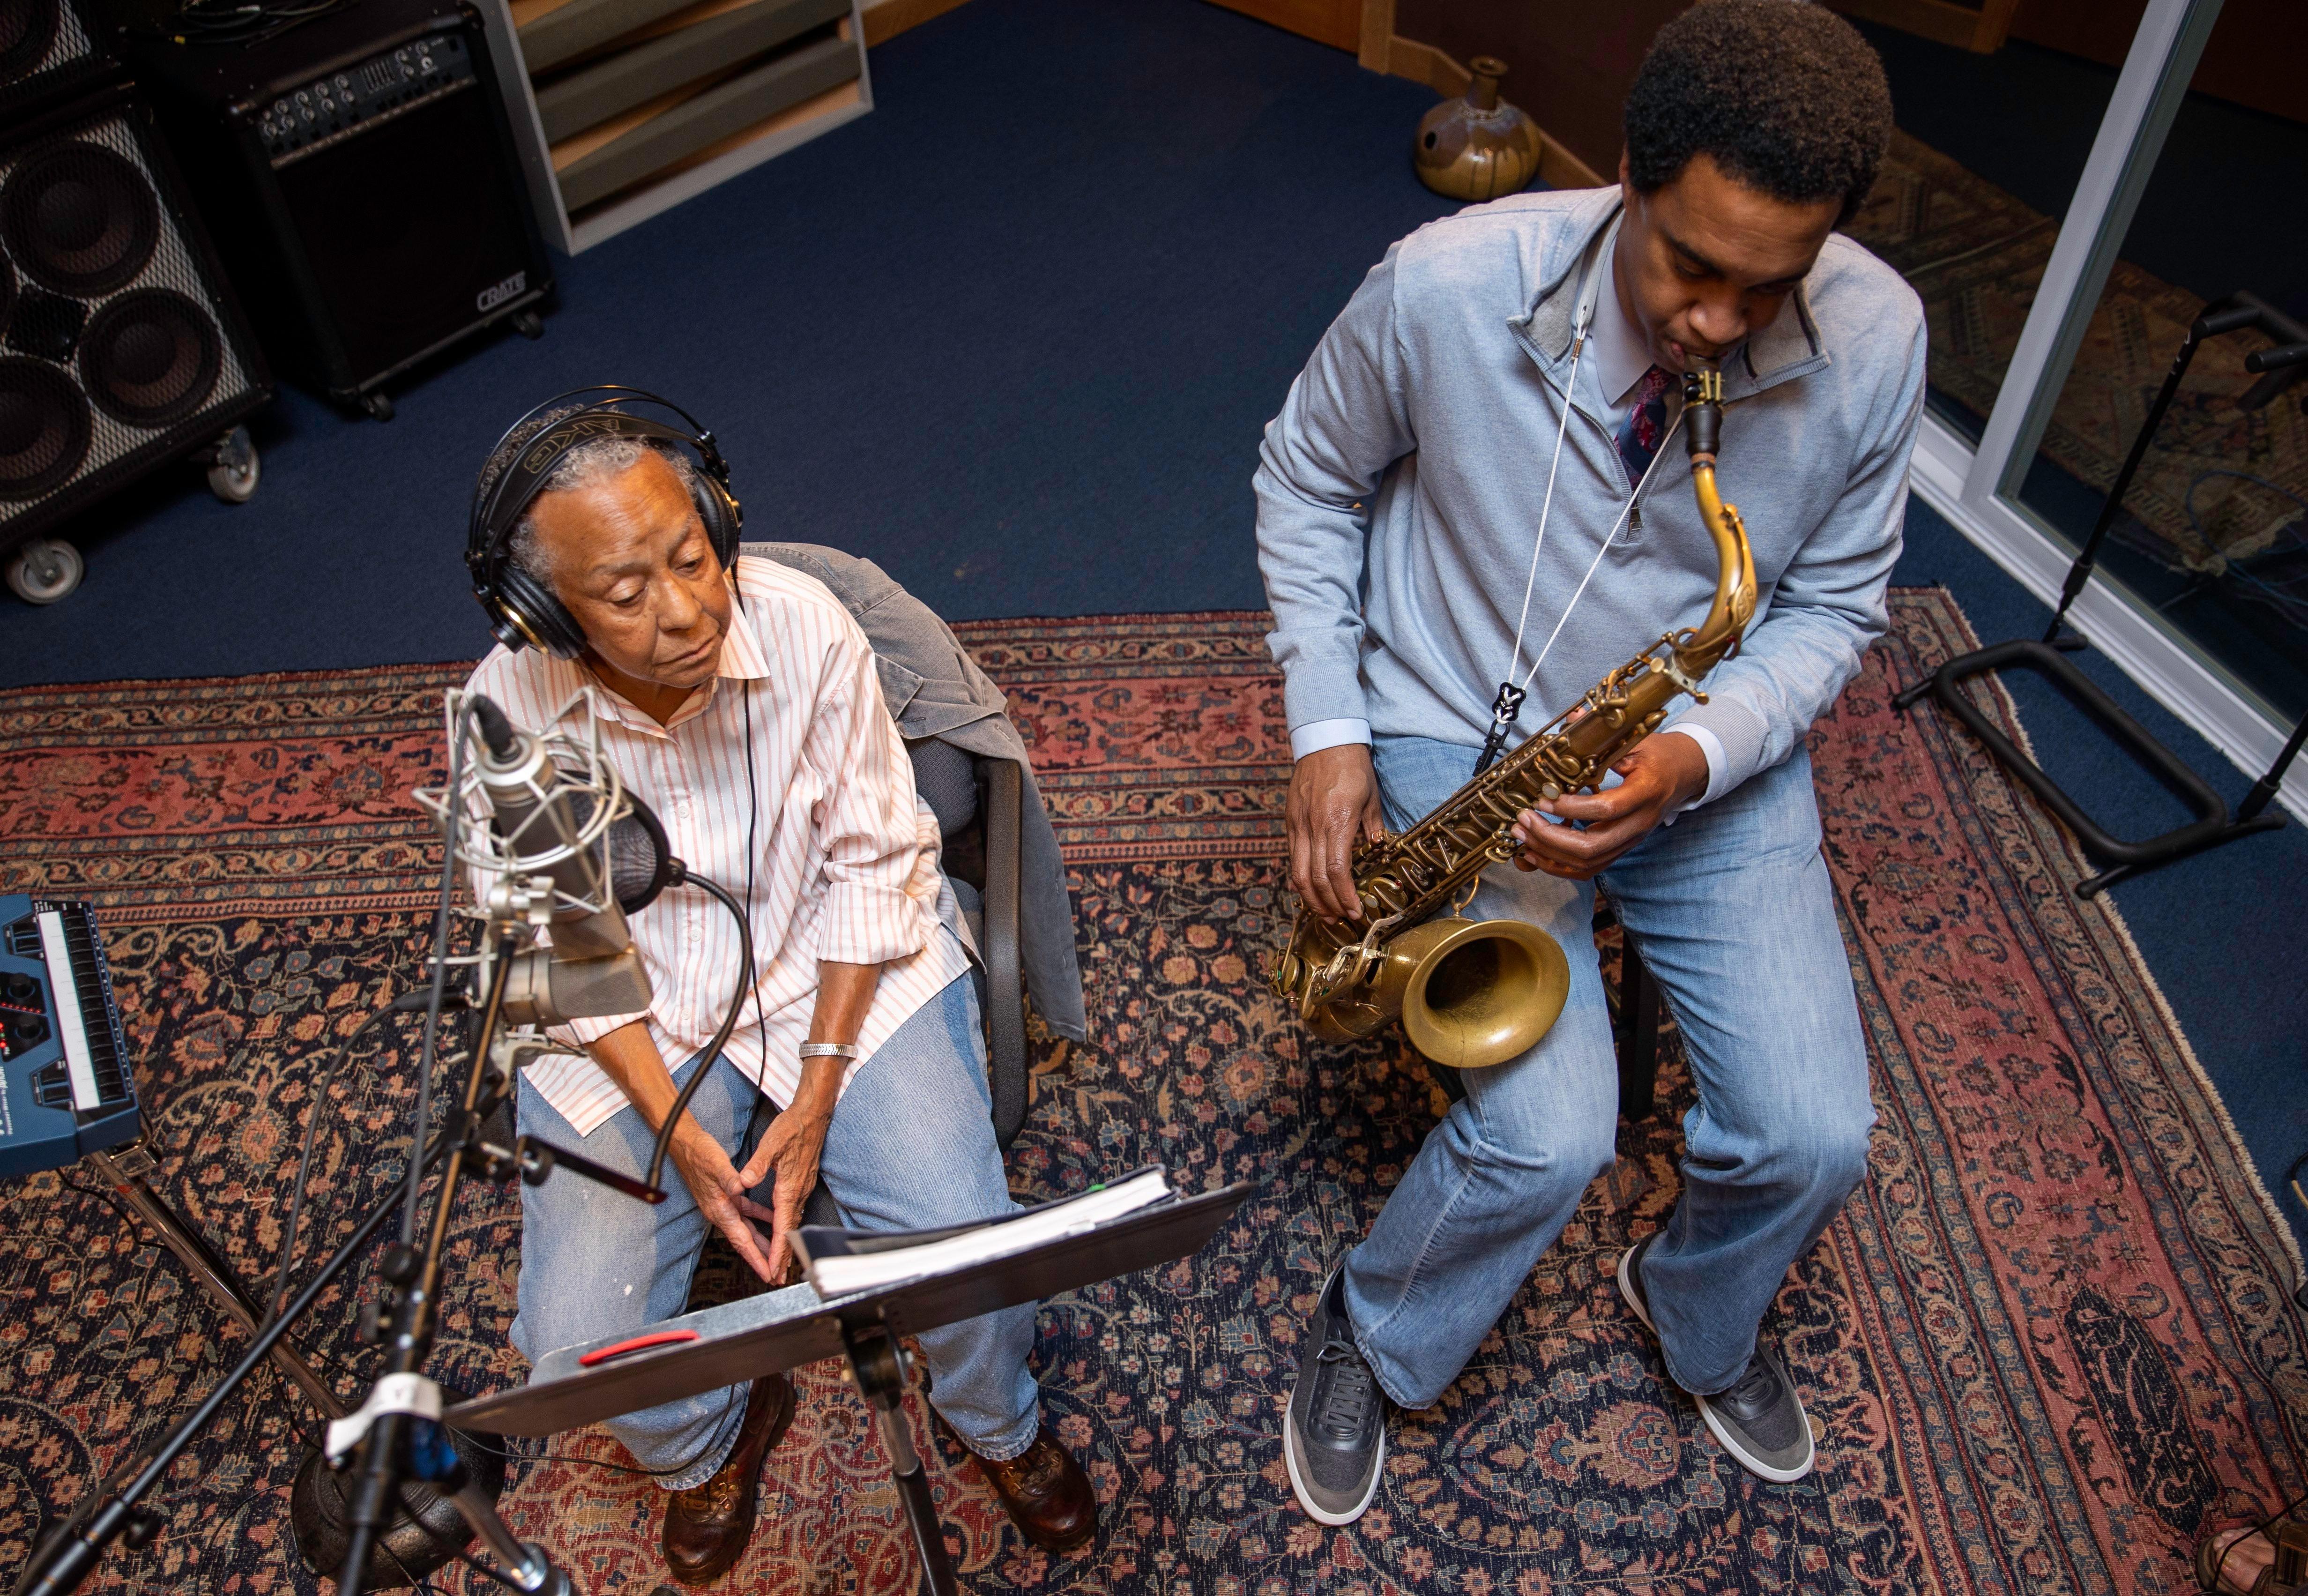 An overhead shot shows poet Nikki Giovanni sitting next to Javon Jackson in a recording studio as he plays the saxophone.